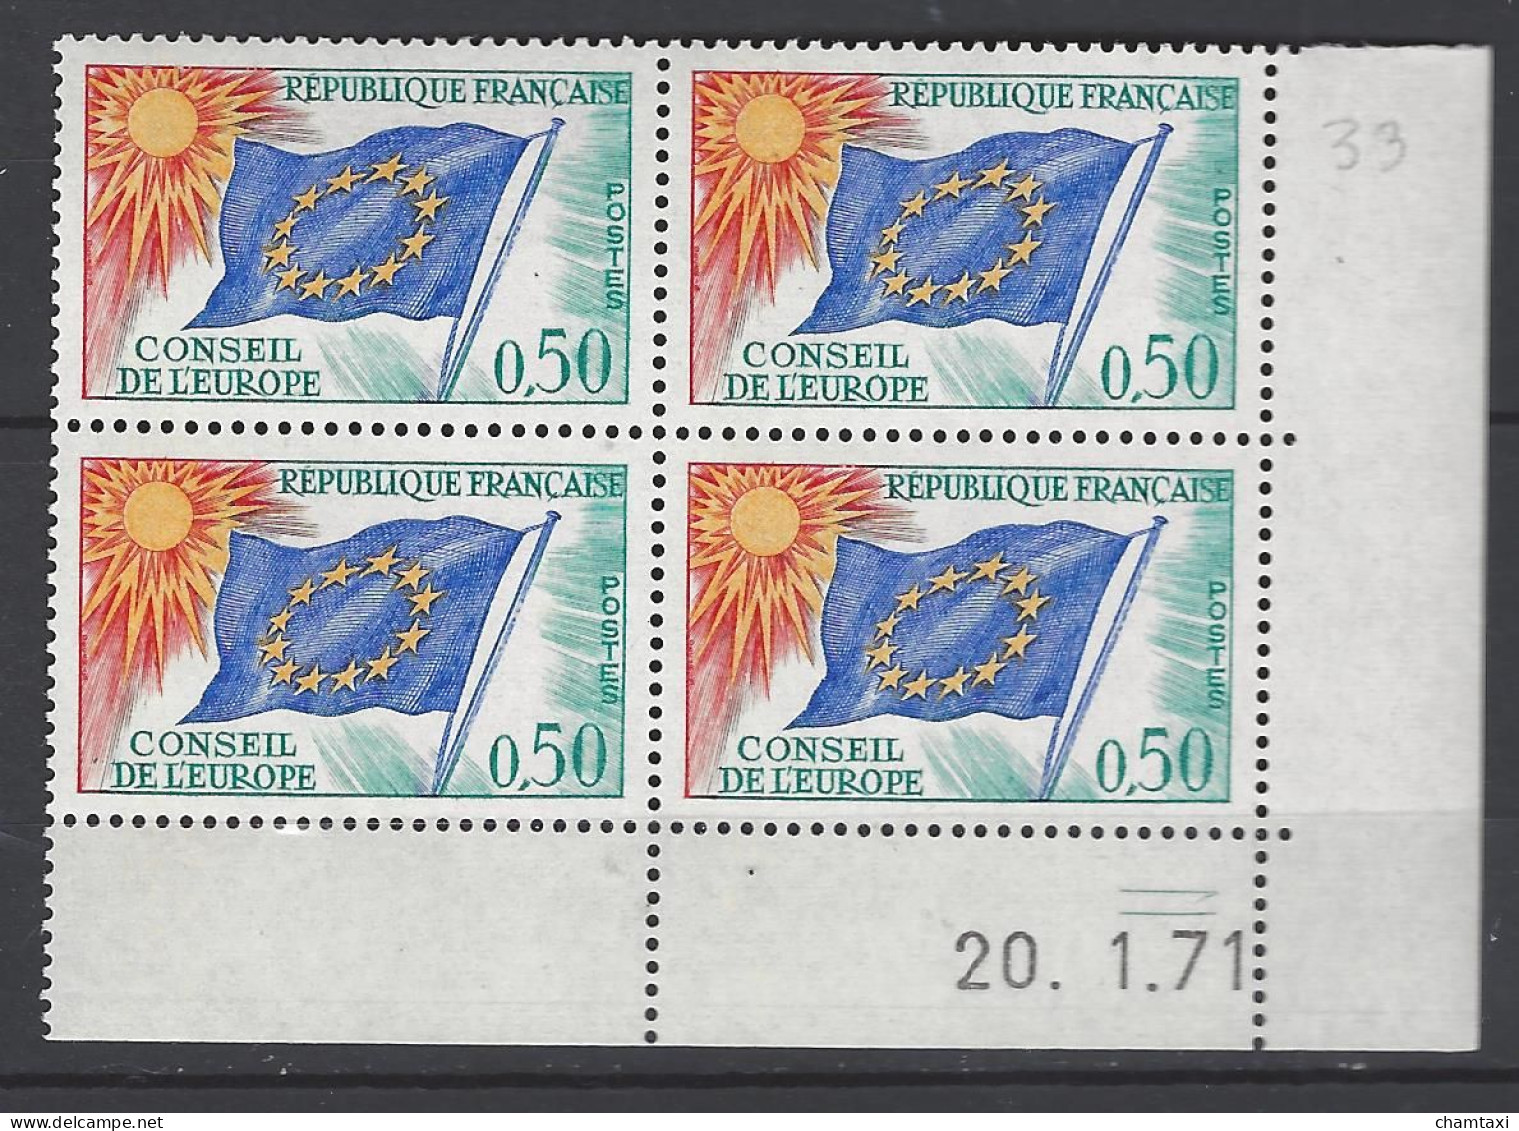 CD 33 FRANCE 1971 TIMBRE SERVICE CONSEIL DE L EUROPE DRAPEAU TYPE 1958 1959  COIN DATE 33 : 20 / 1 / 71 - Service